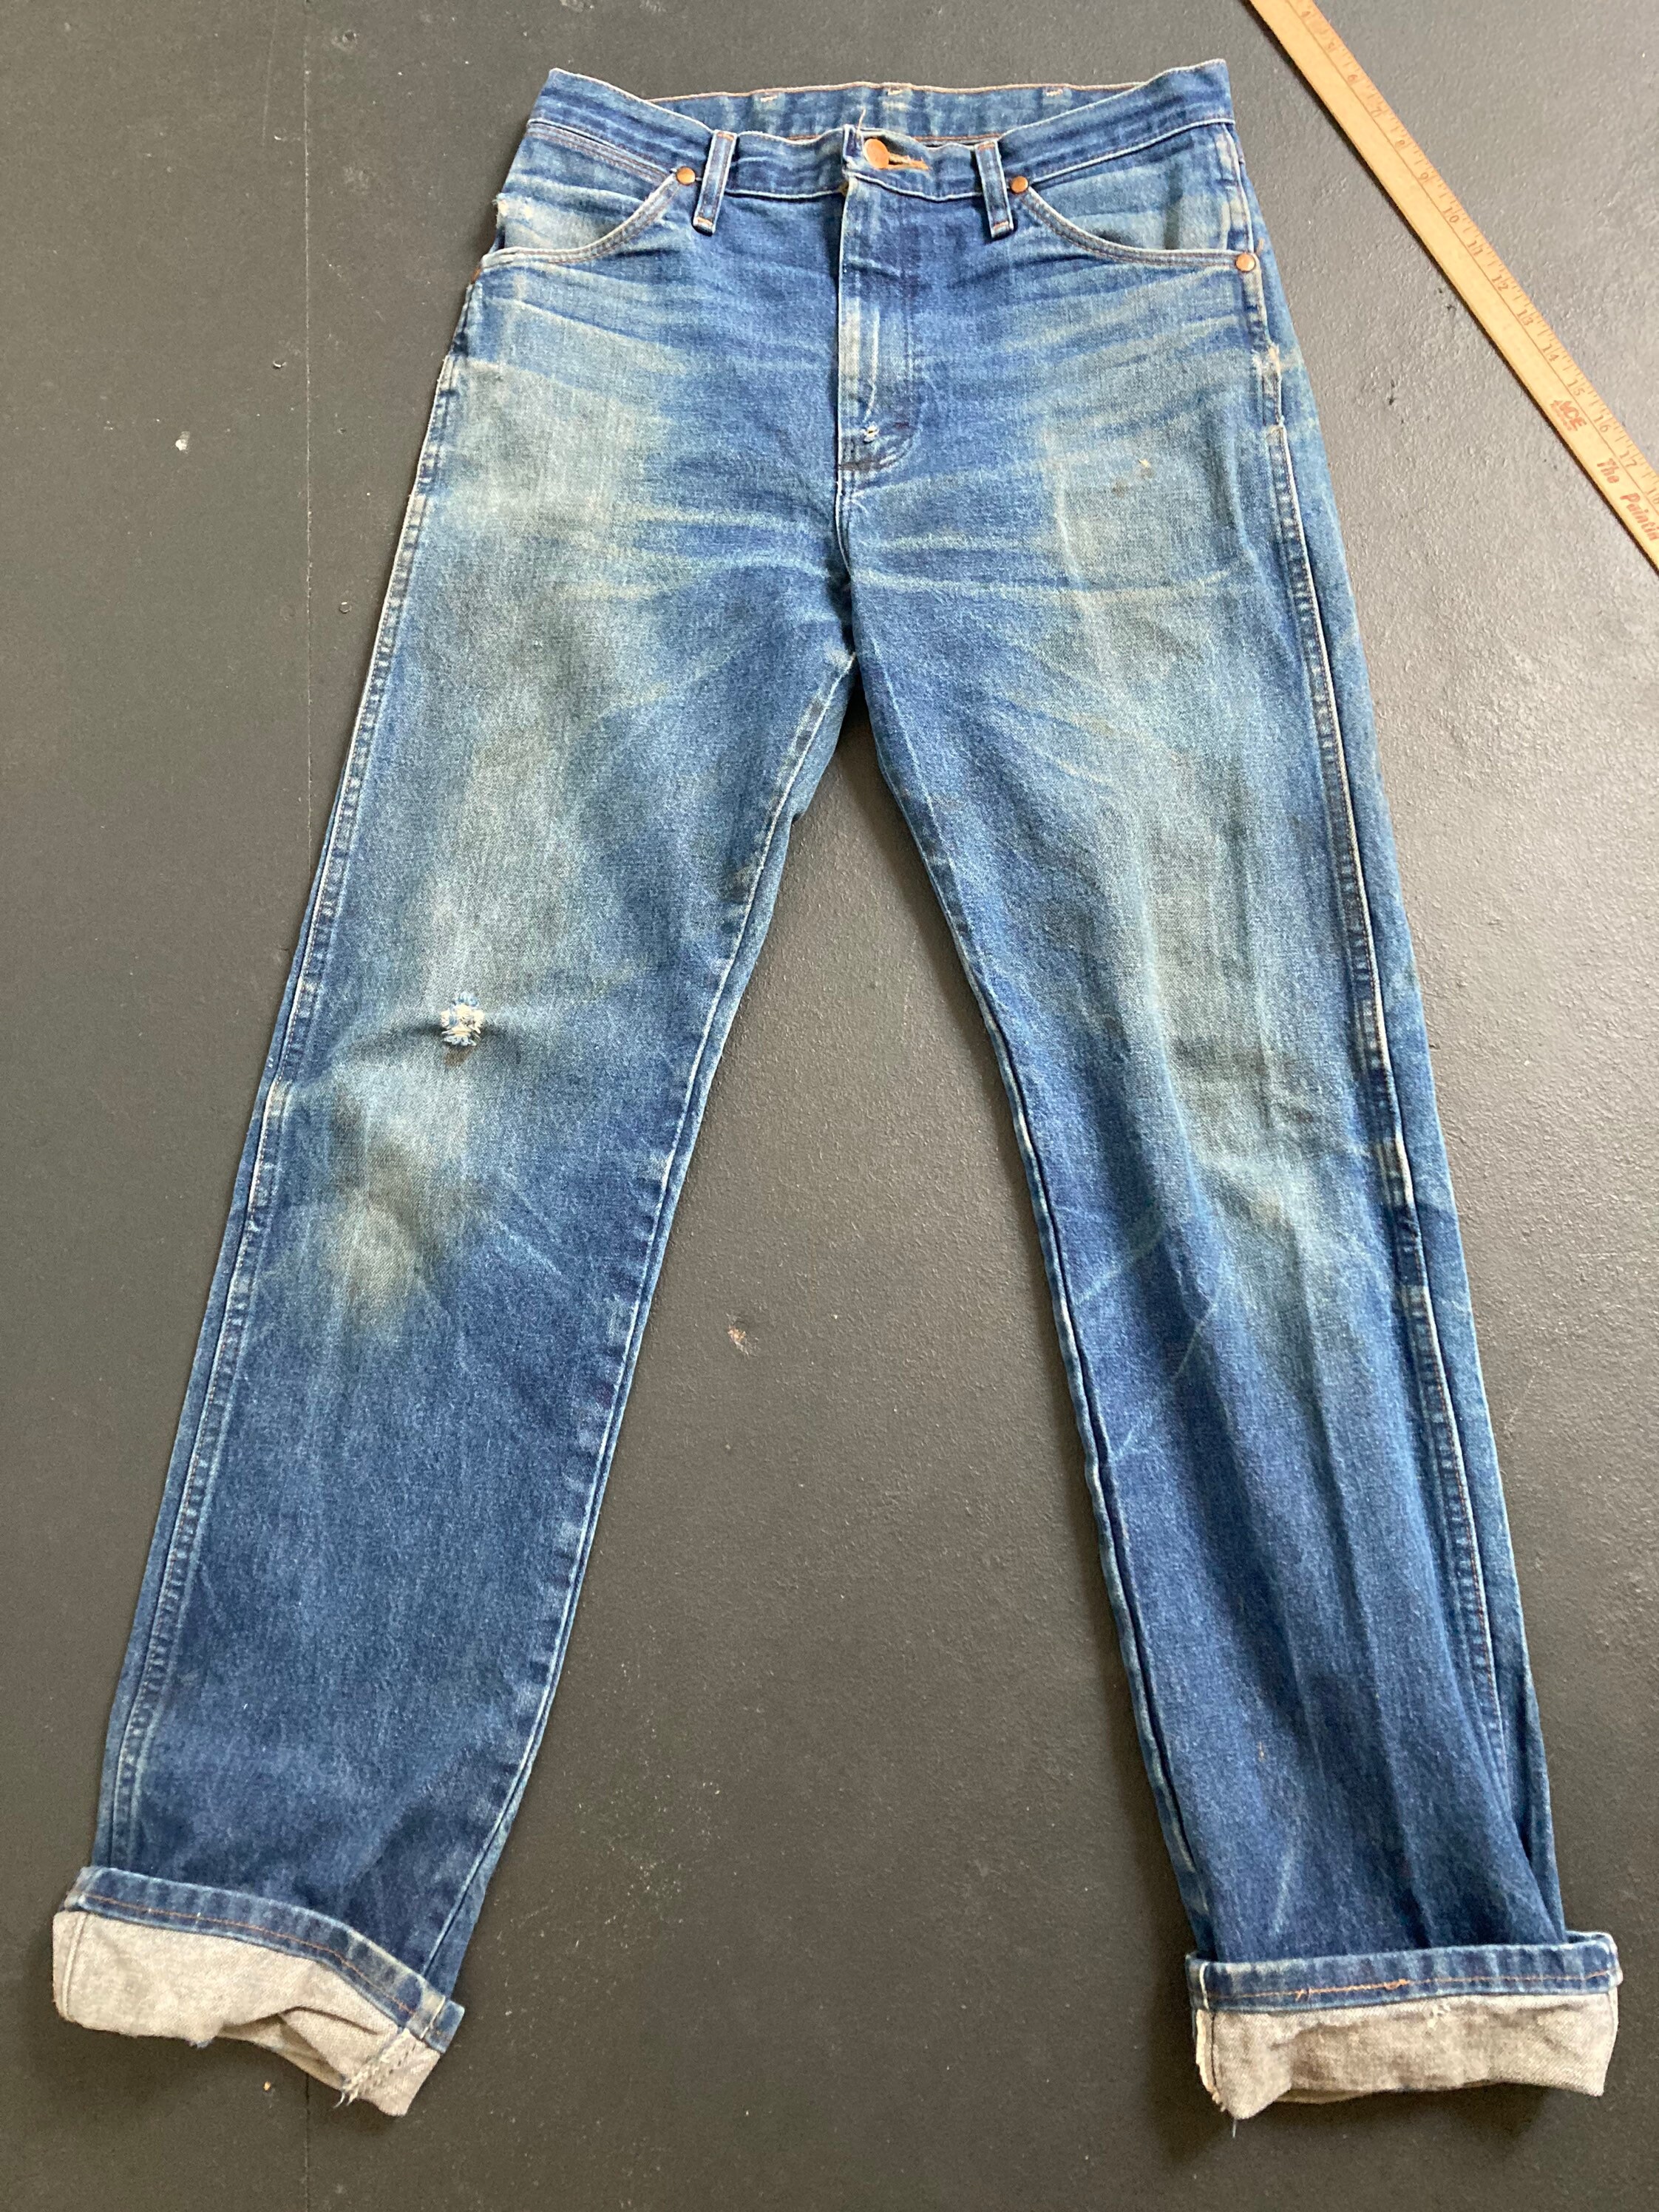 Wrangler 13mwz 32x33 distressed fades work jeans | Etsy